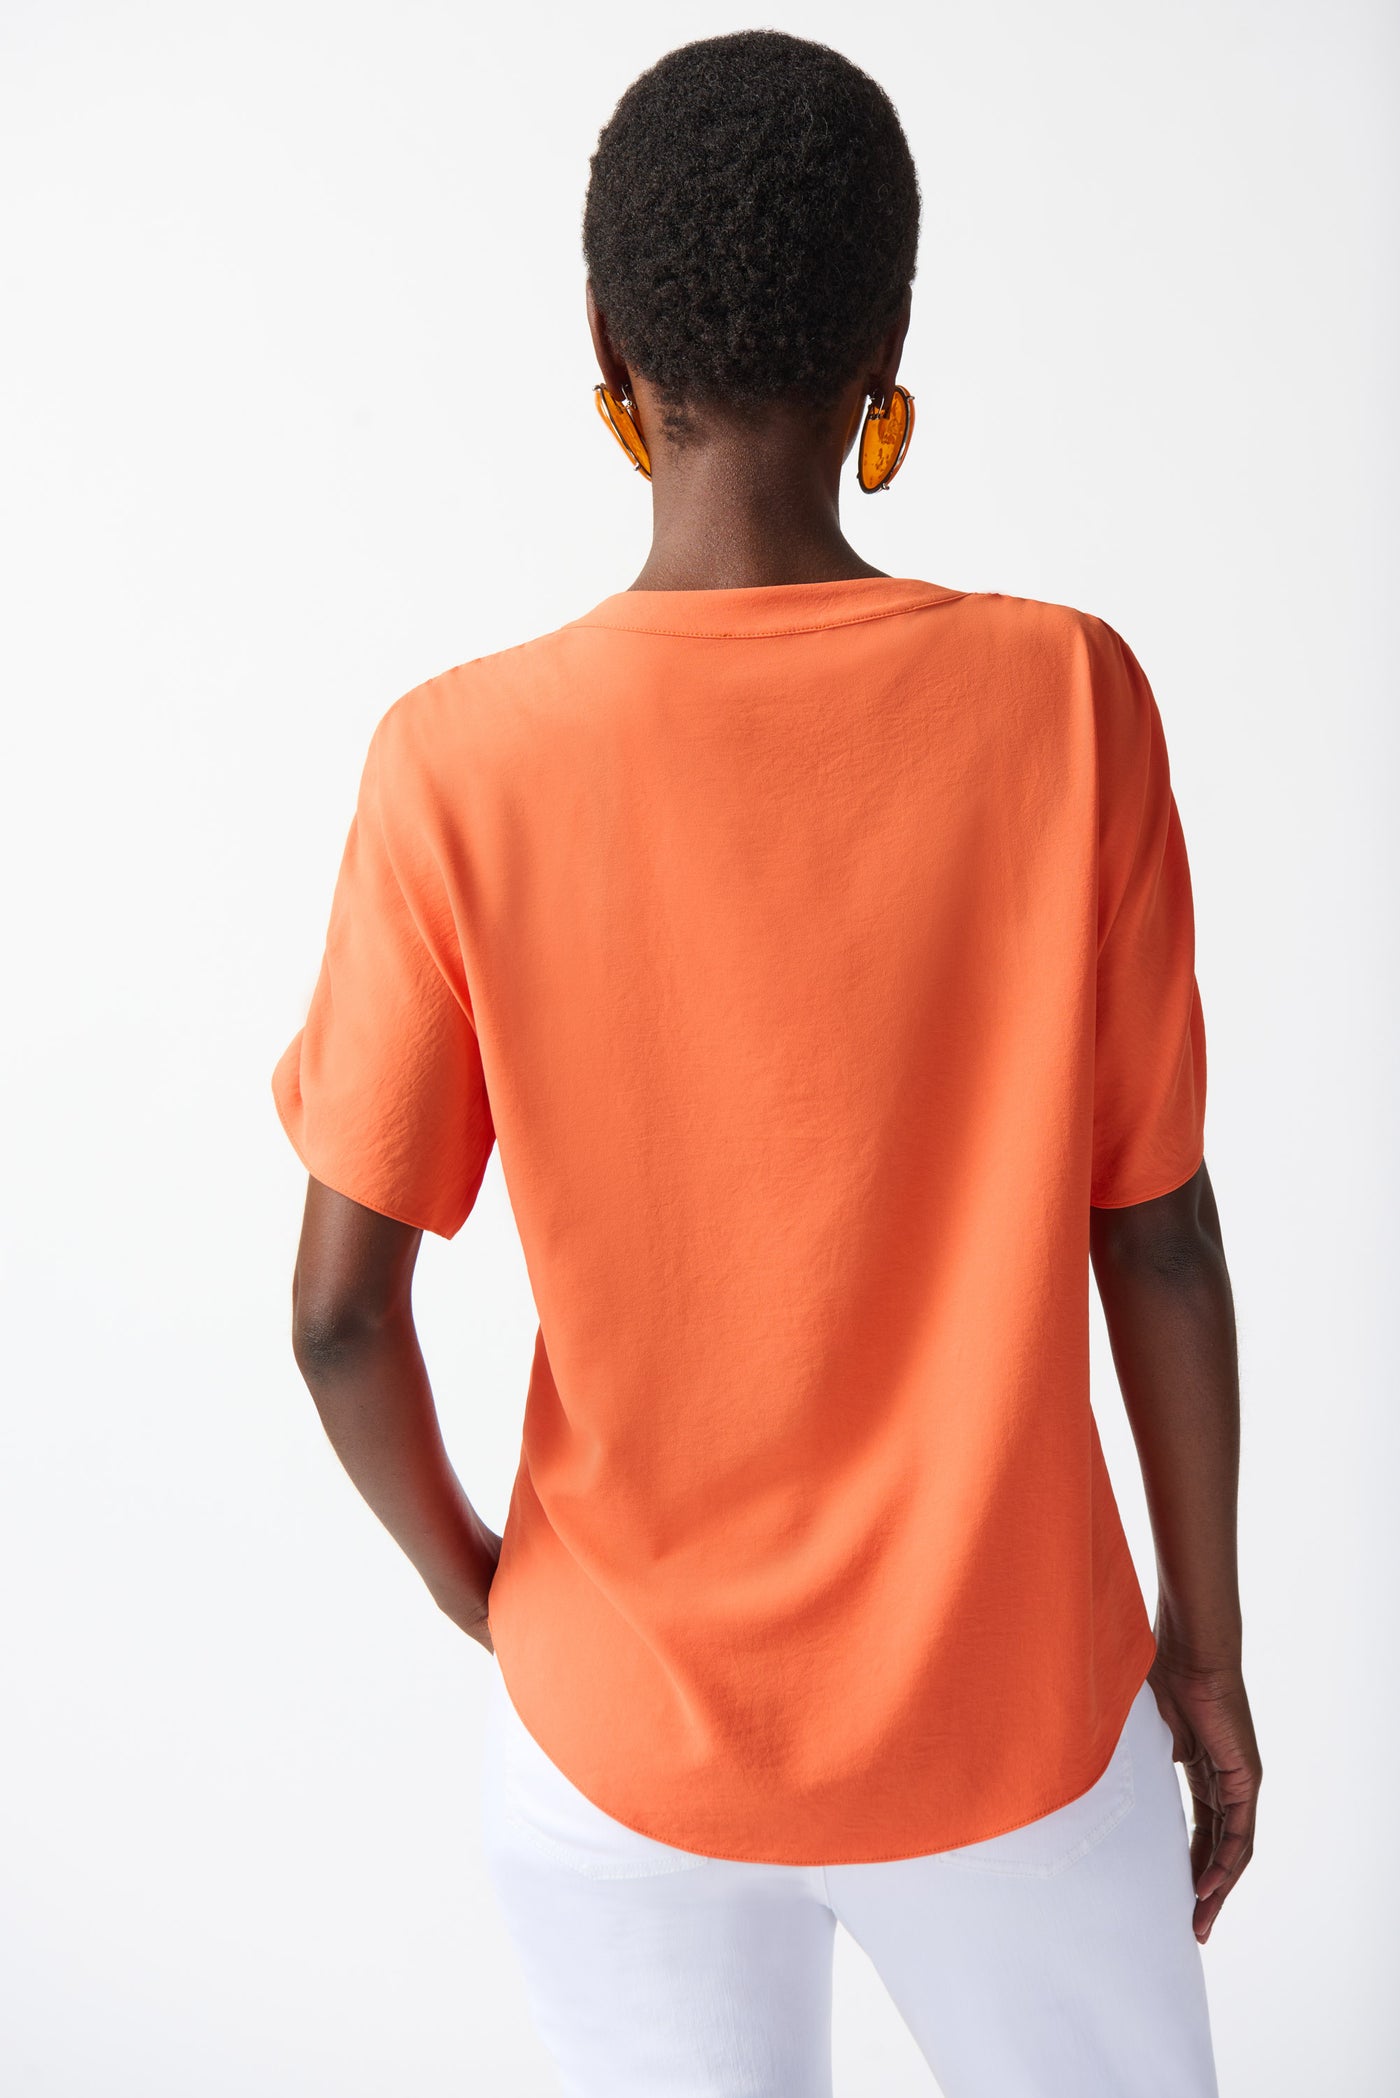 Joseph Ribkoff Orange Woven Boxy Top With Shoulder Tie Detail